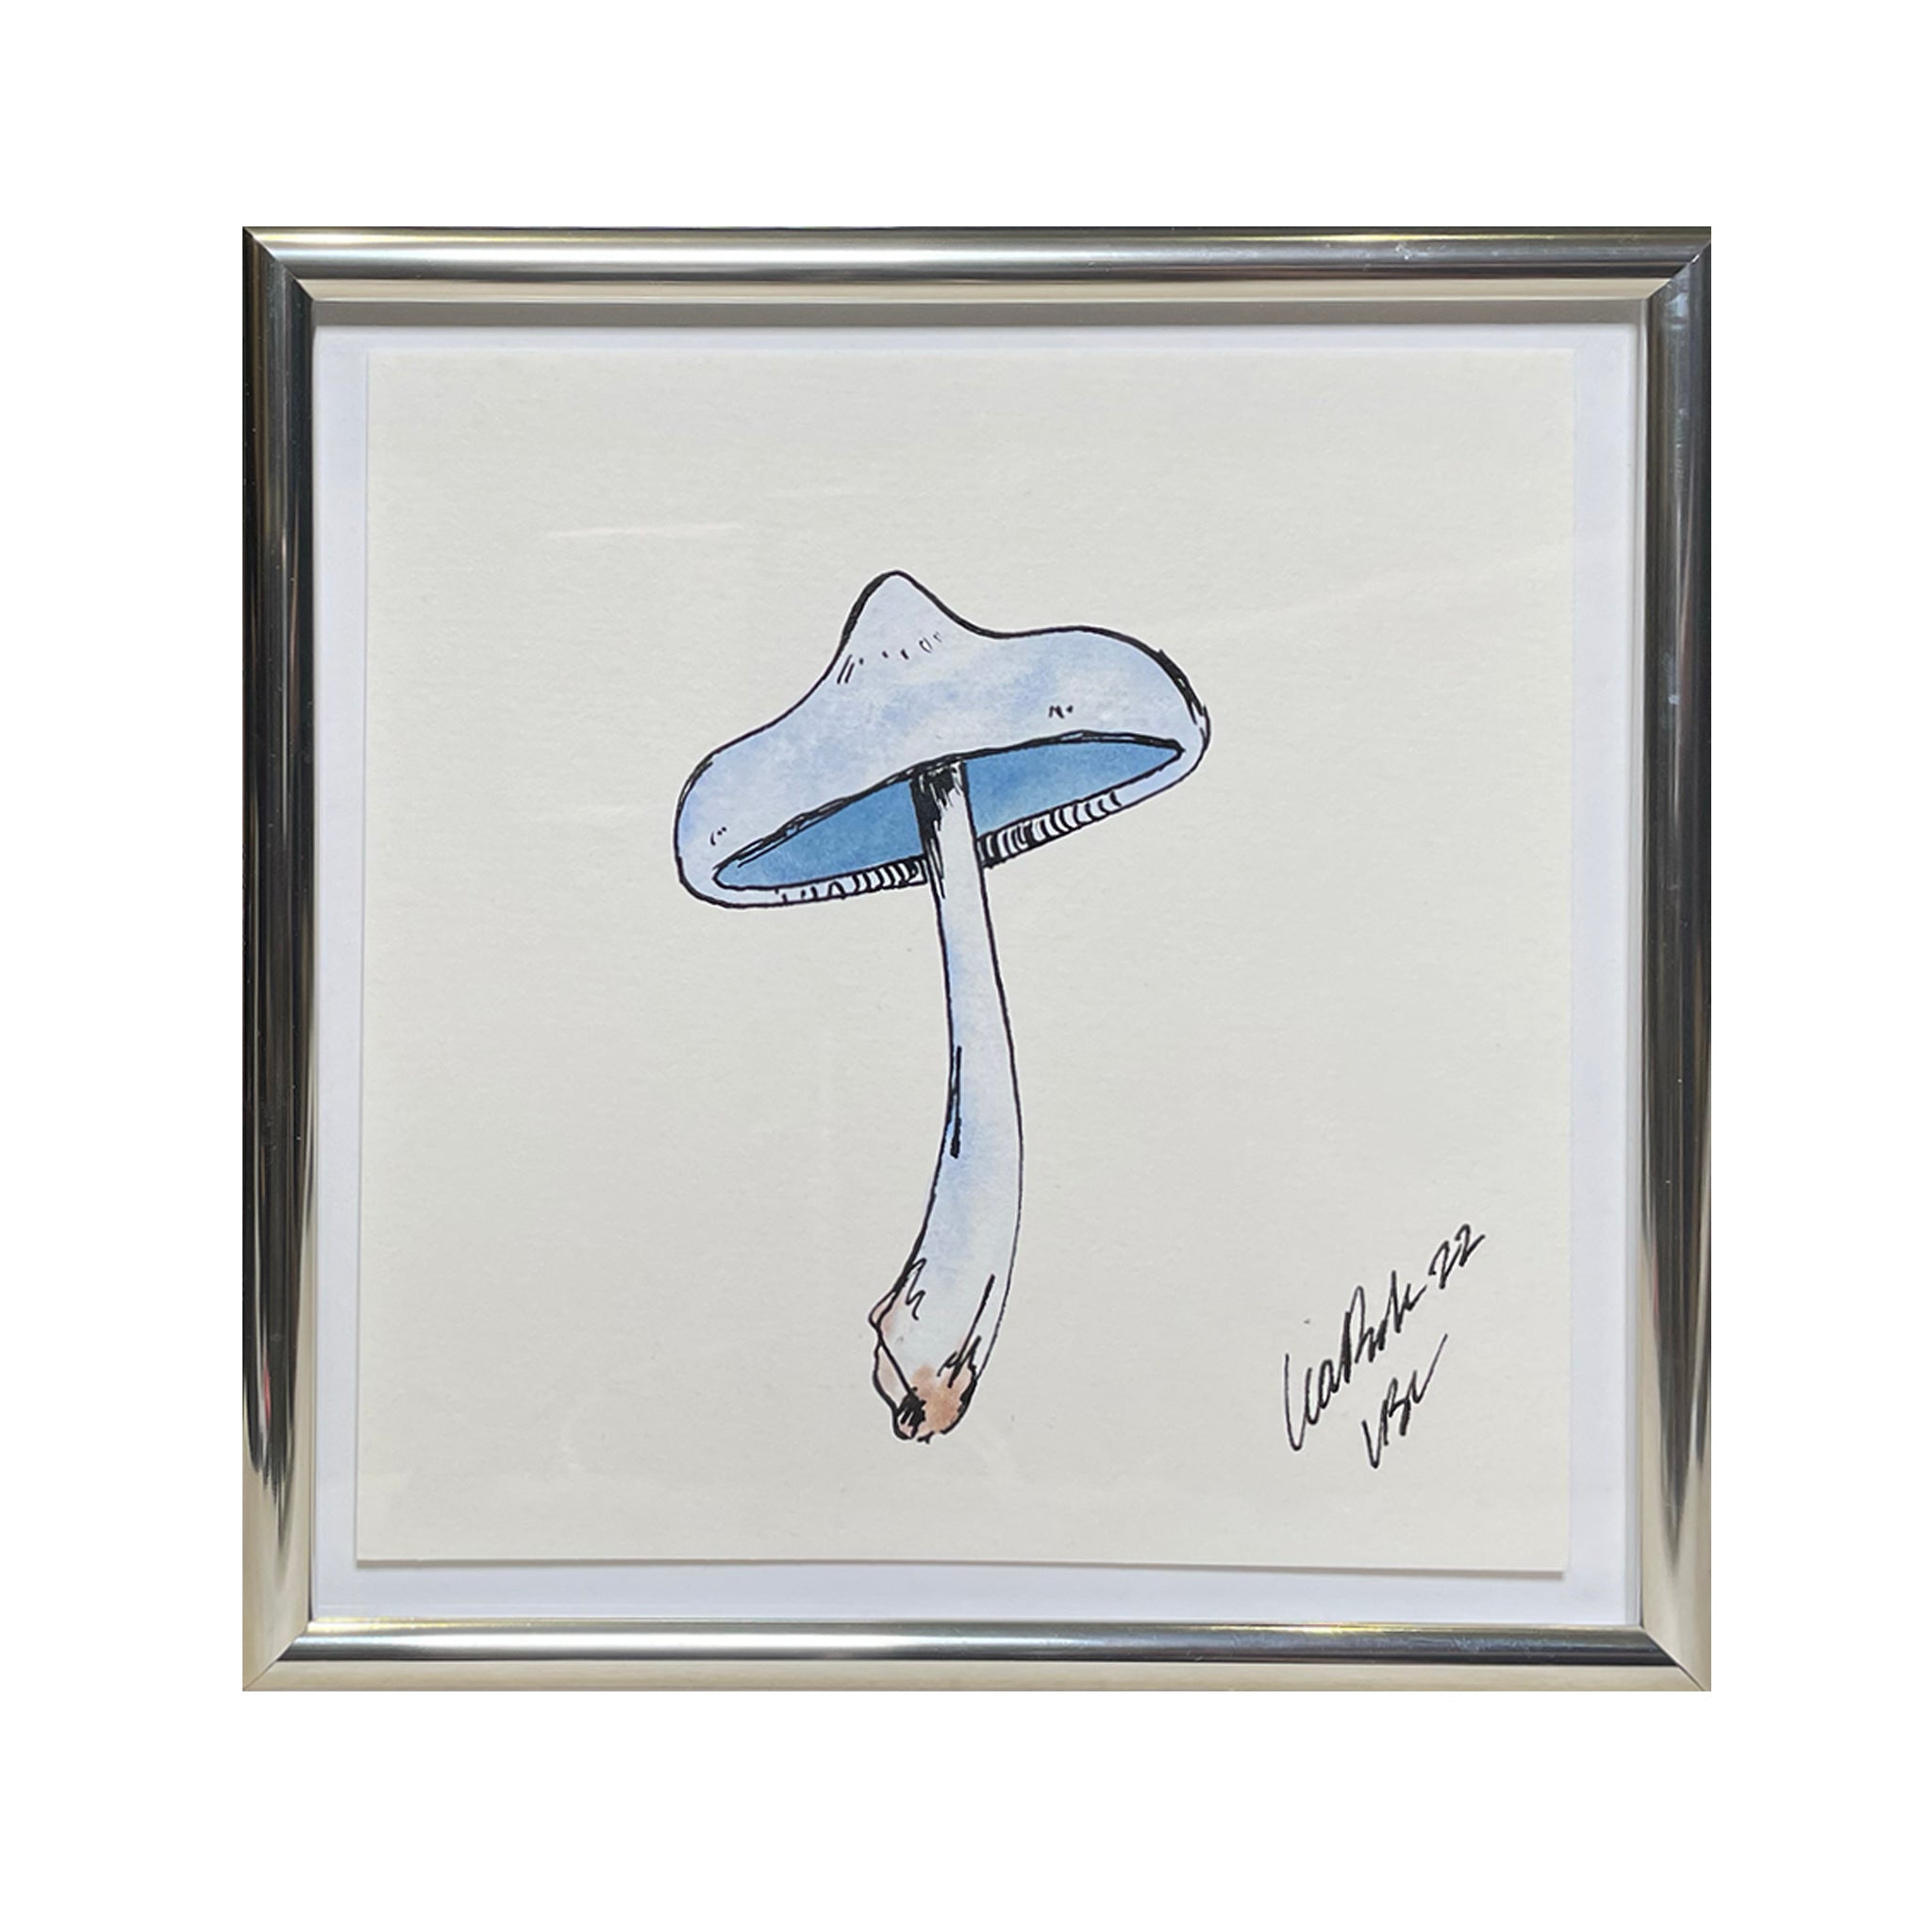 Lia Burke Libaire, Mushroom Watercolors